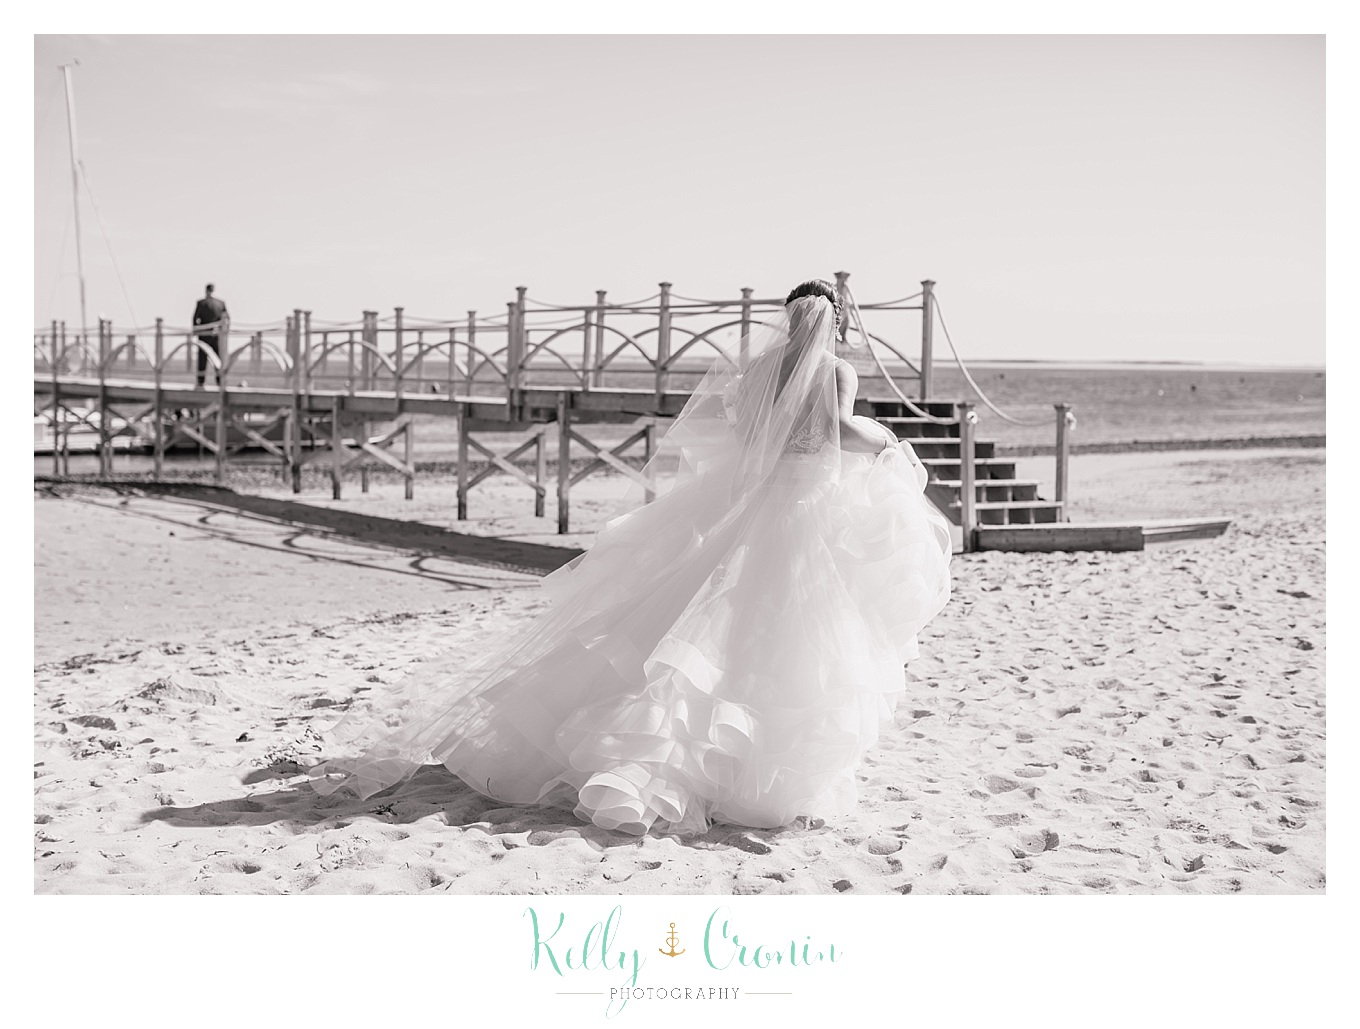 A bride walks in the sand | Kelly Cronin Photography | Cape Cod Wedding Photographer